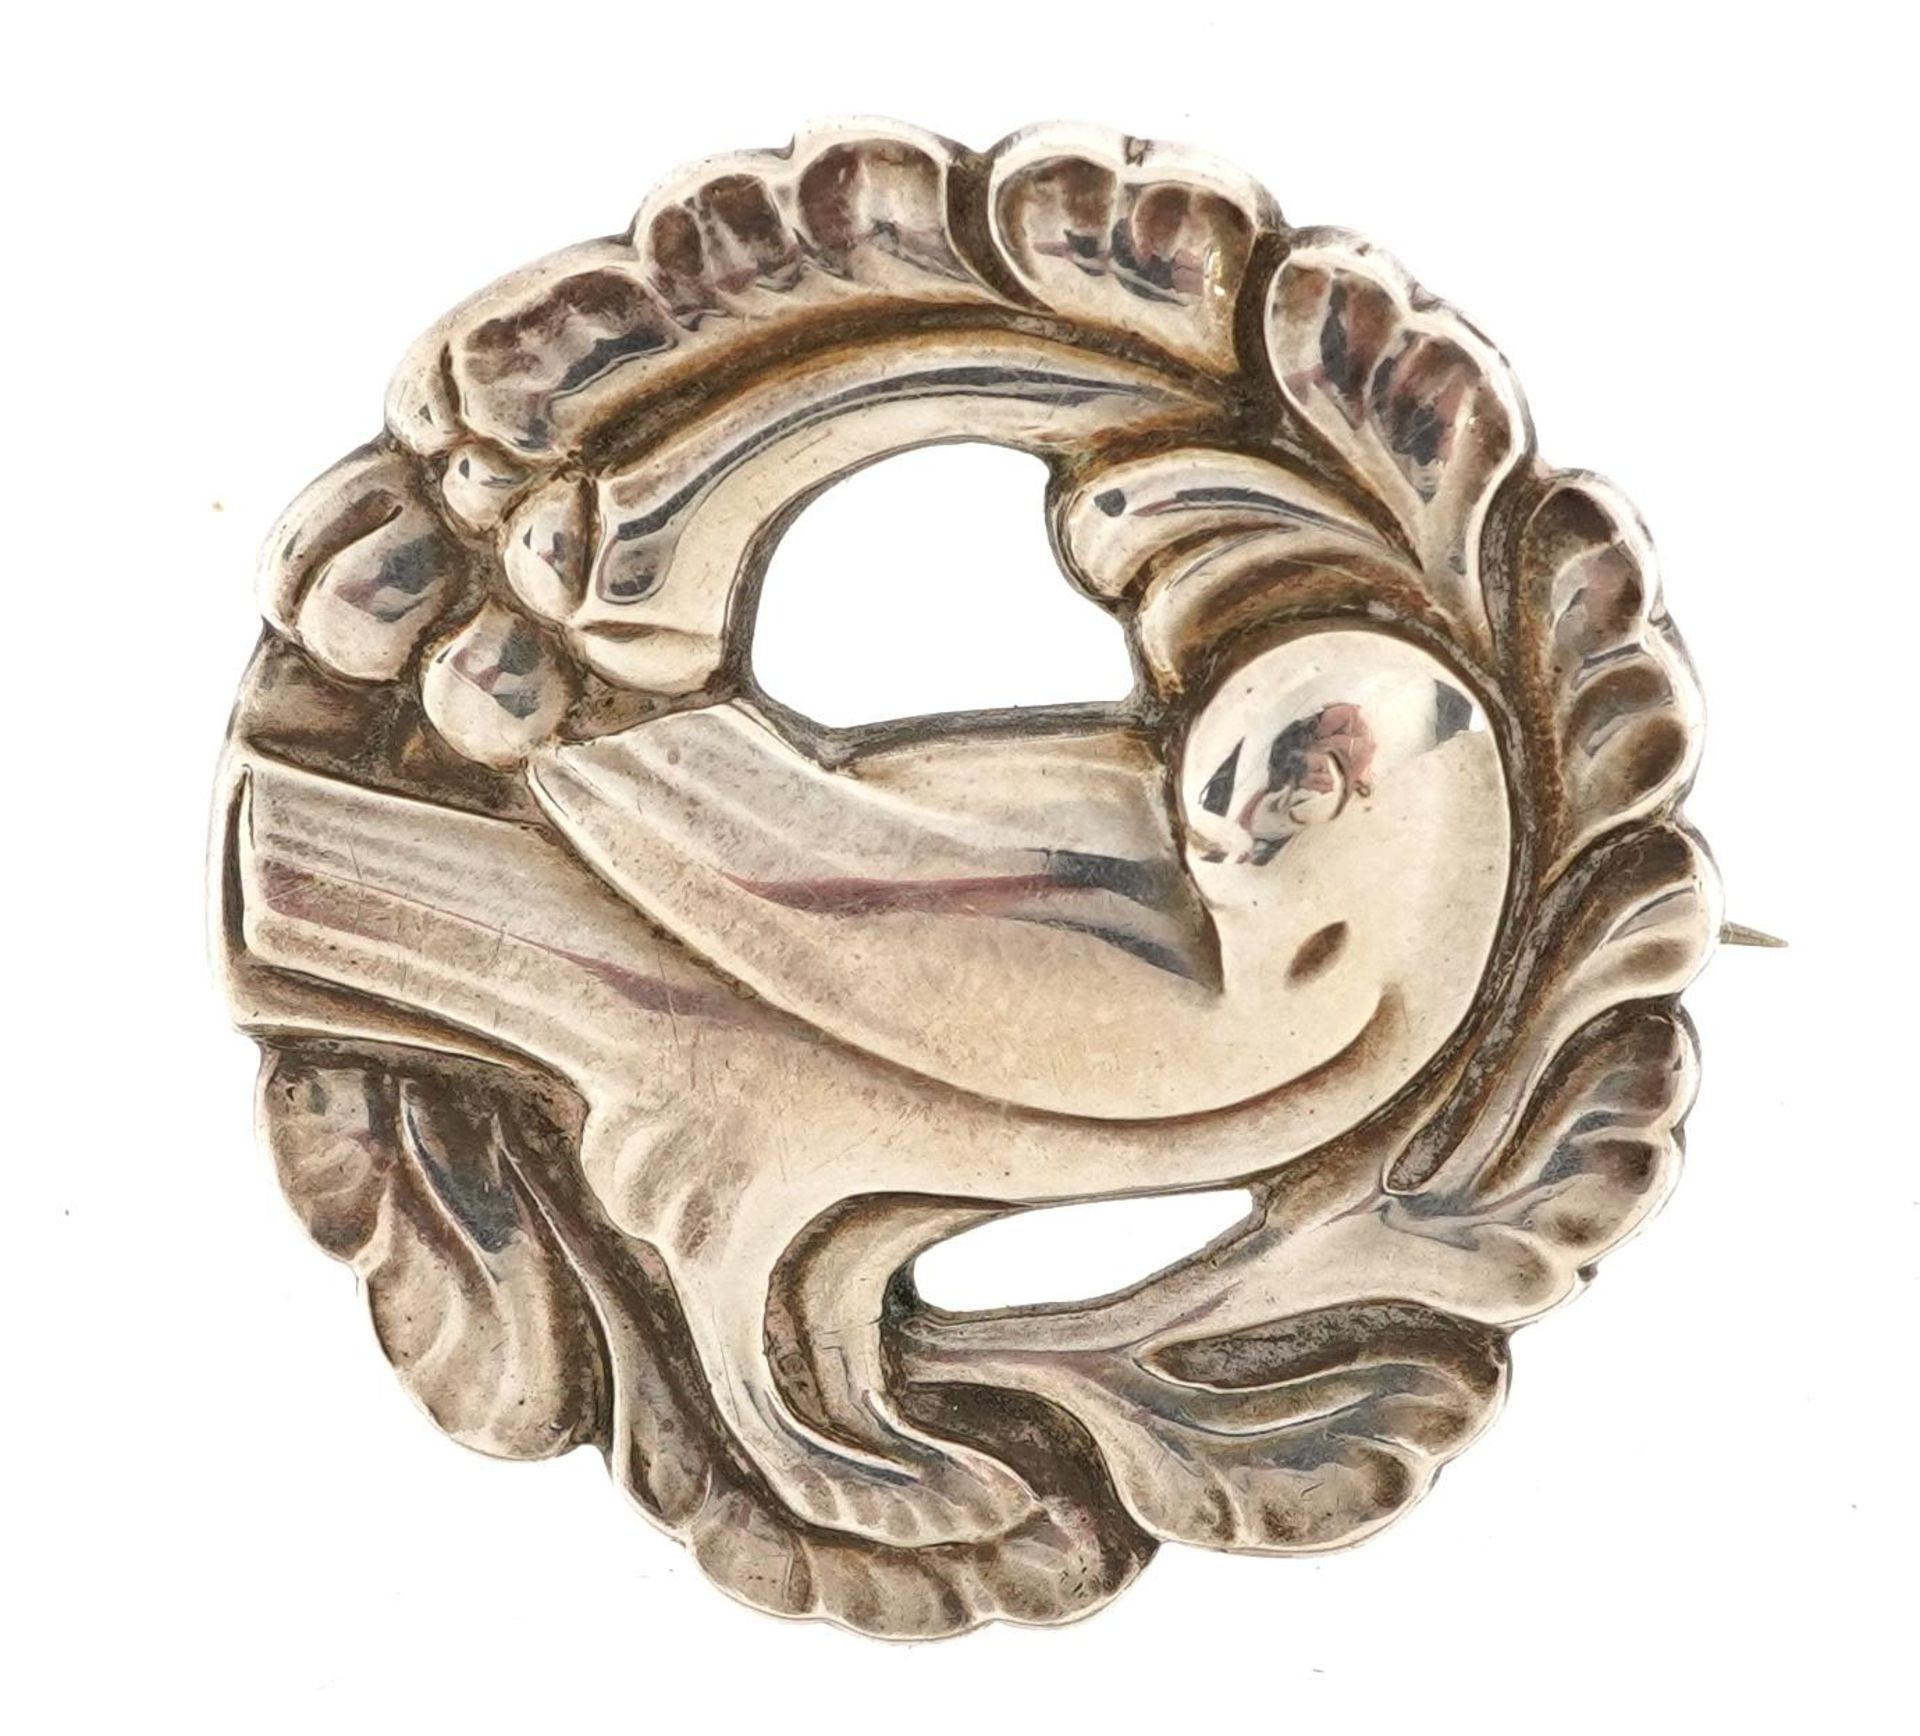 Kristian Moehl Hansen for Georg Jensen, sterling silver circular bird wreath brooch numbered 134,